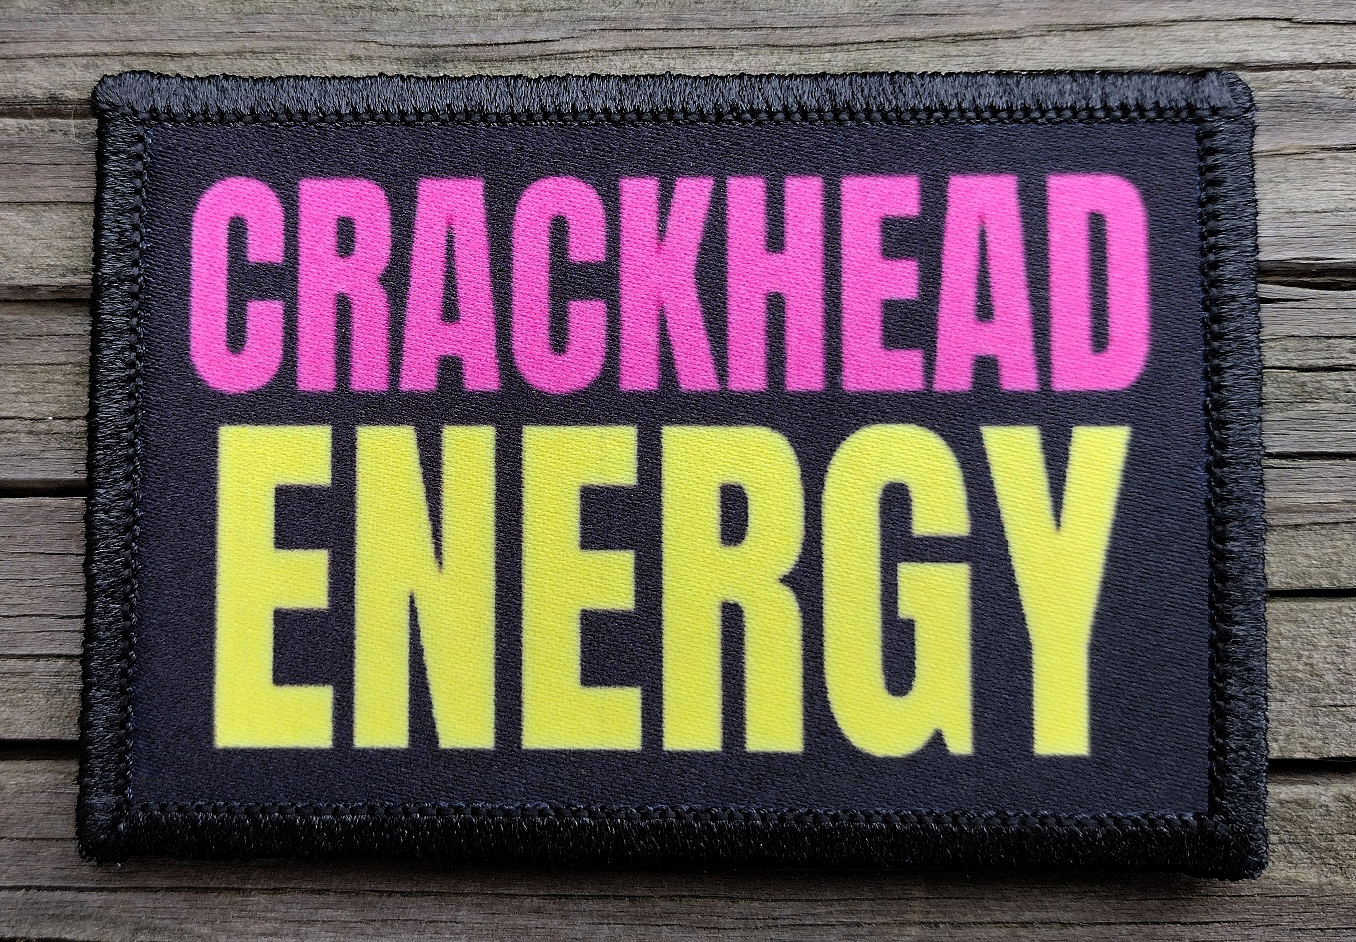 Crackhead Energy Morale Patch